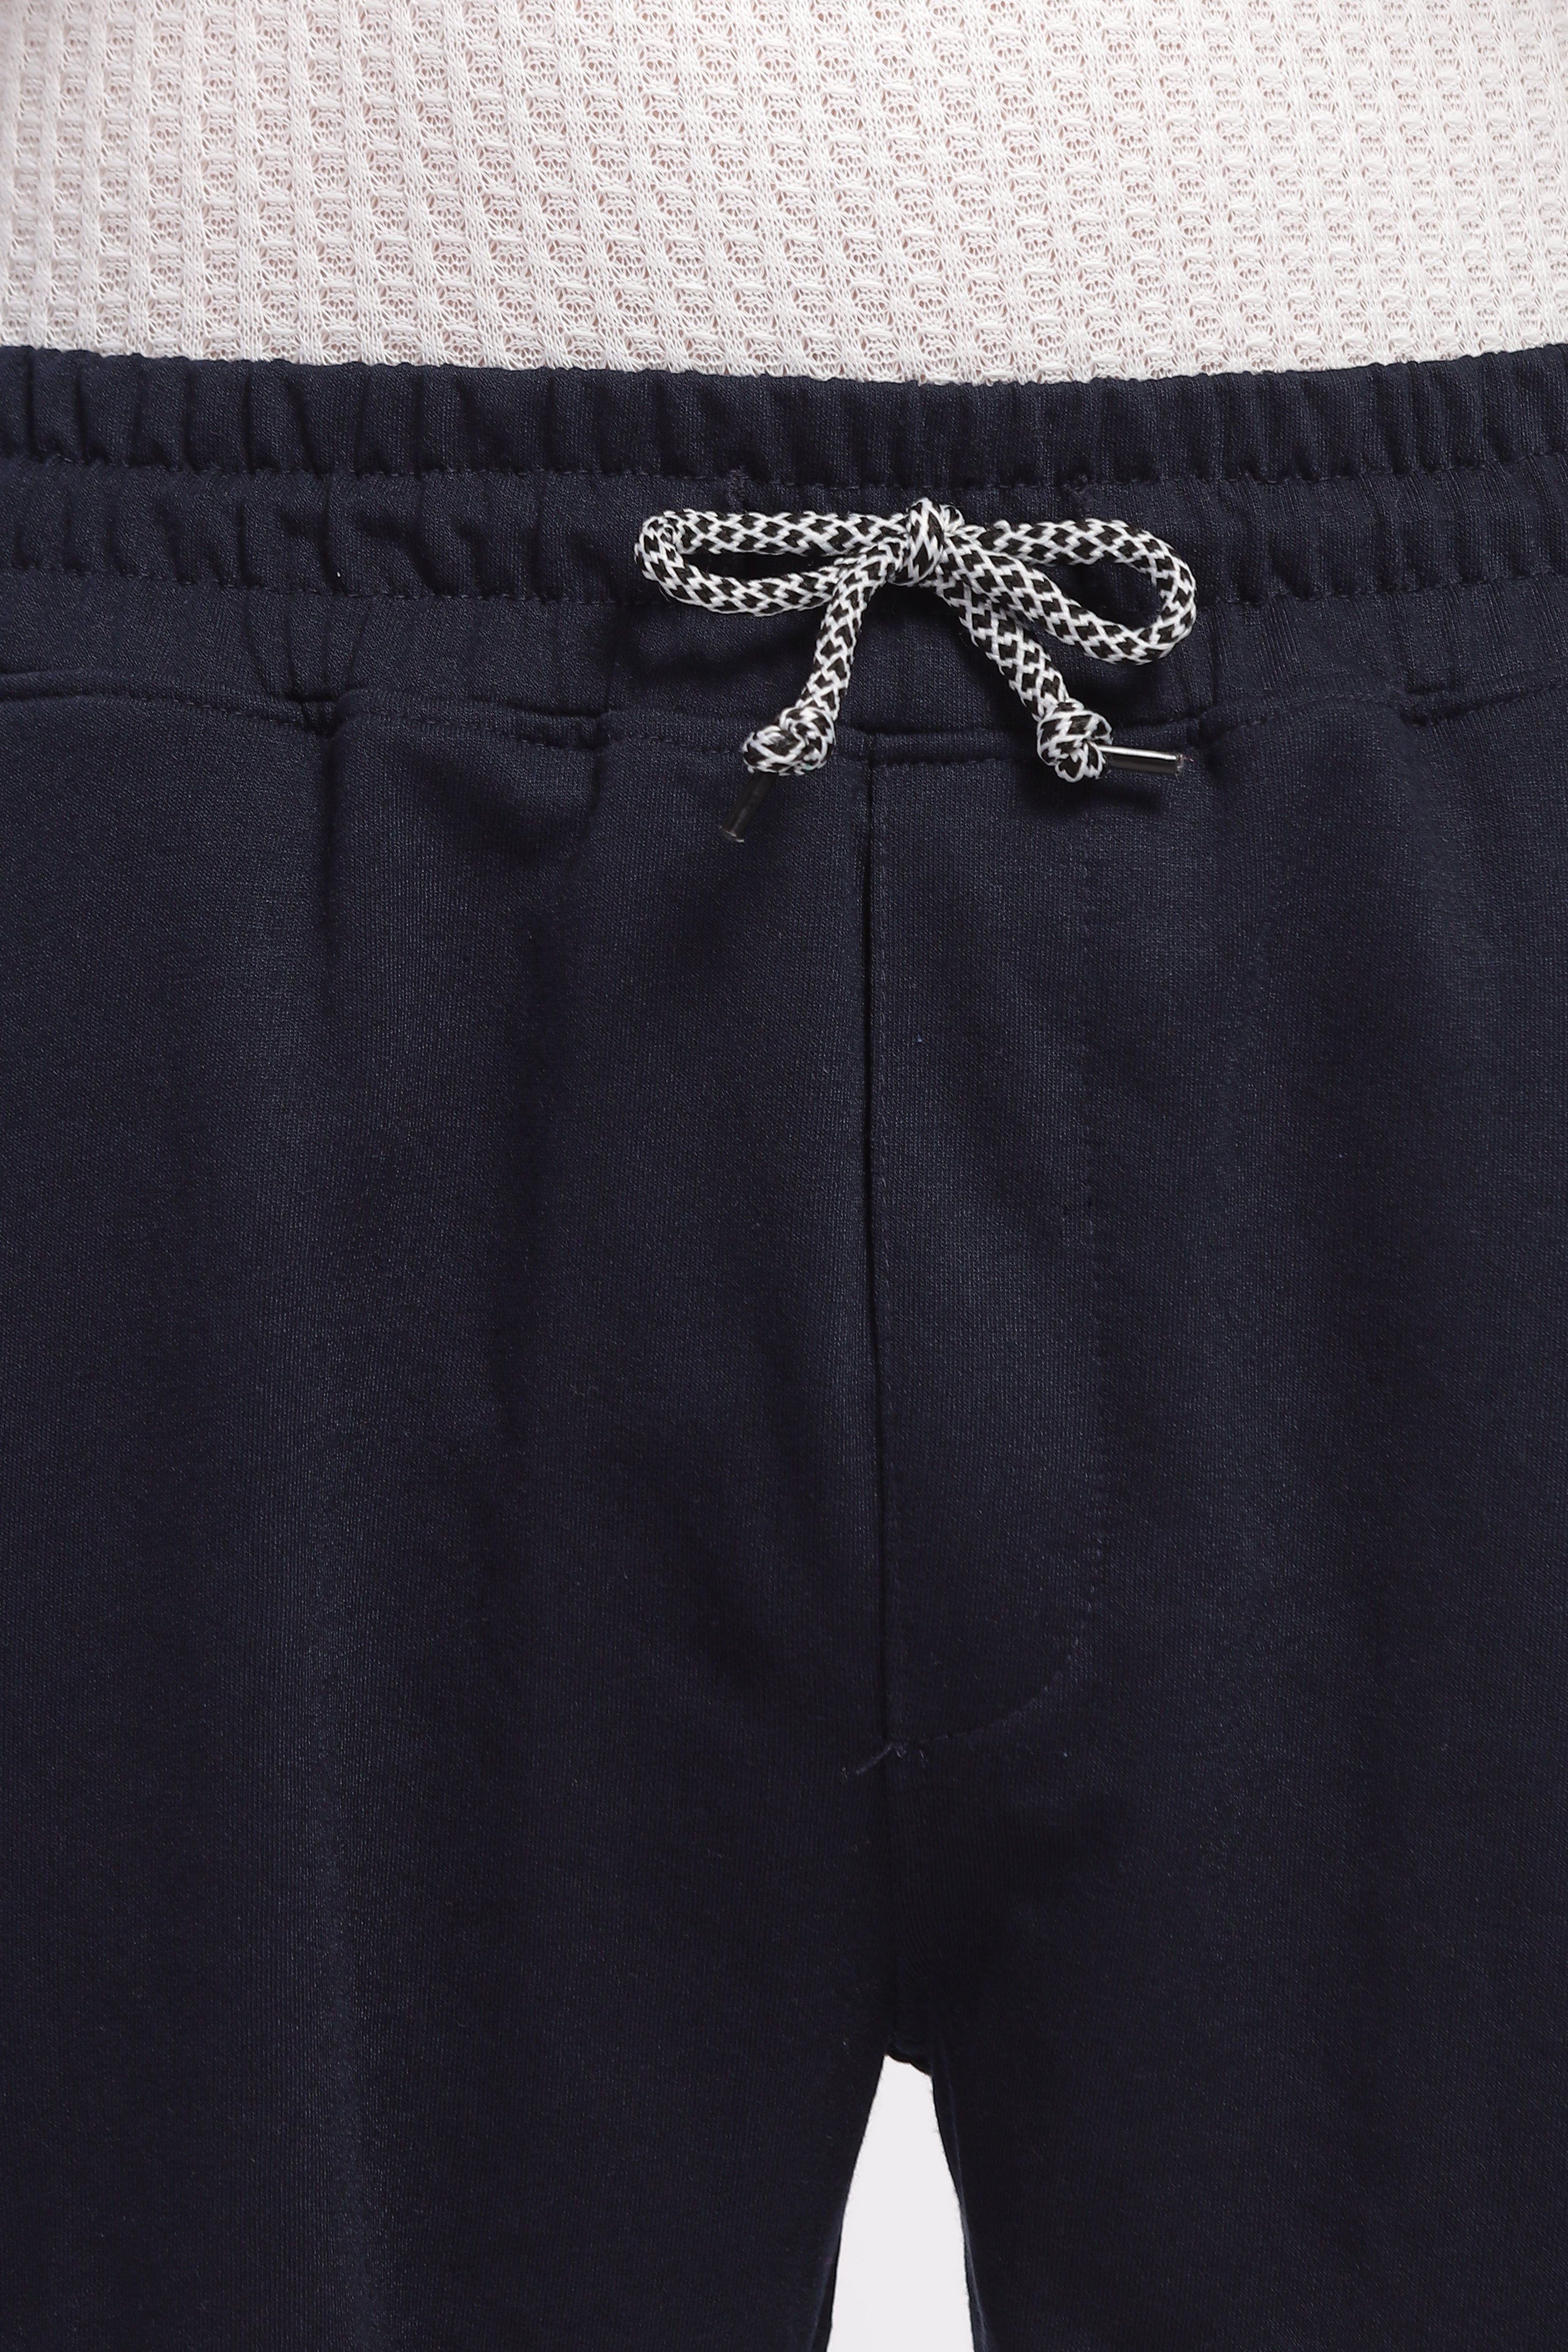 Navy Blue Premium Loop Knit Cotton Shorts